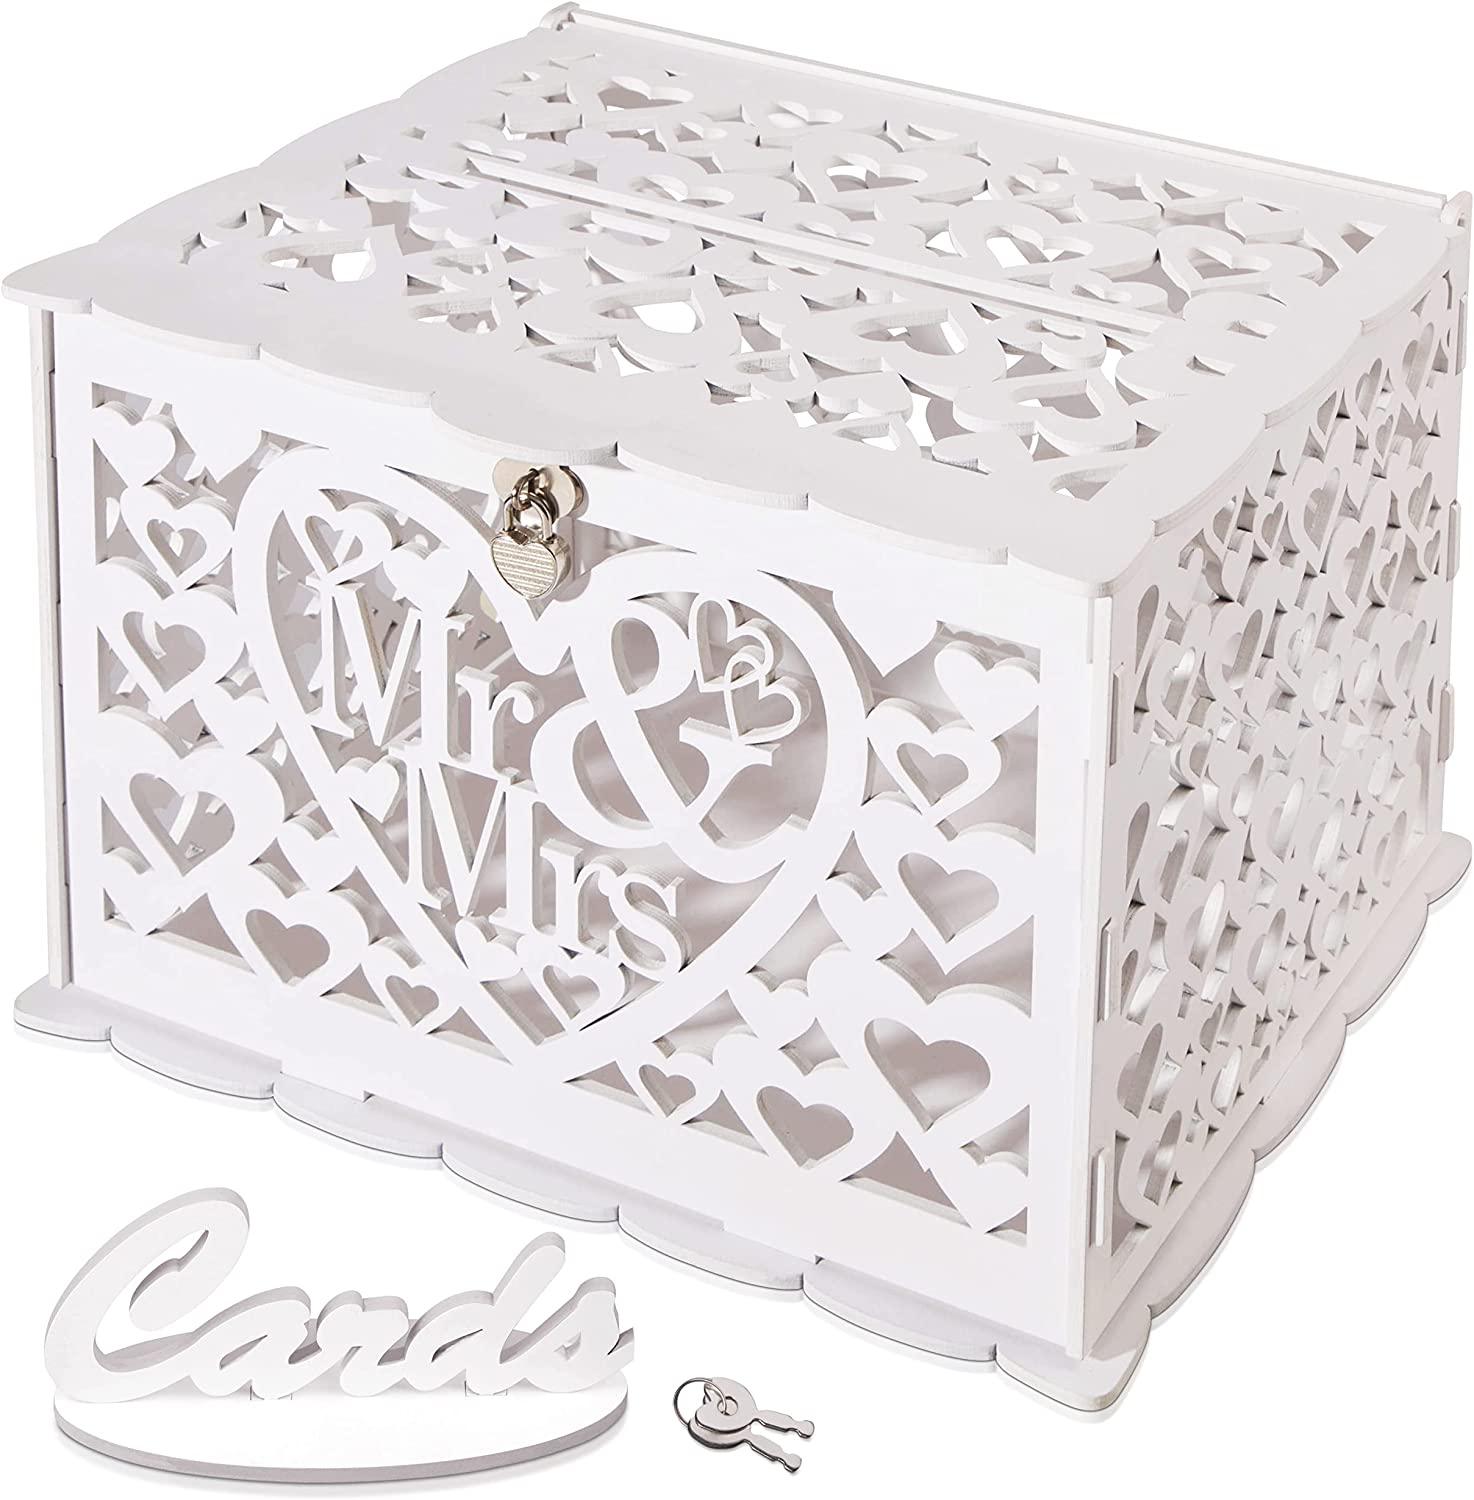 Wedding Card Box With Lock and Key, Card Box for Wedding, Rustic Wedding Decorations for Reception - Lasercutwraps Shop